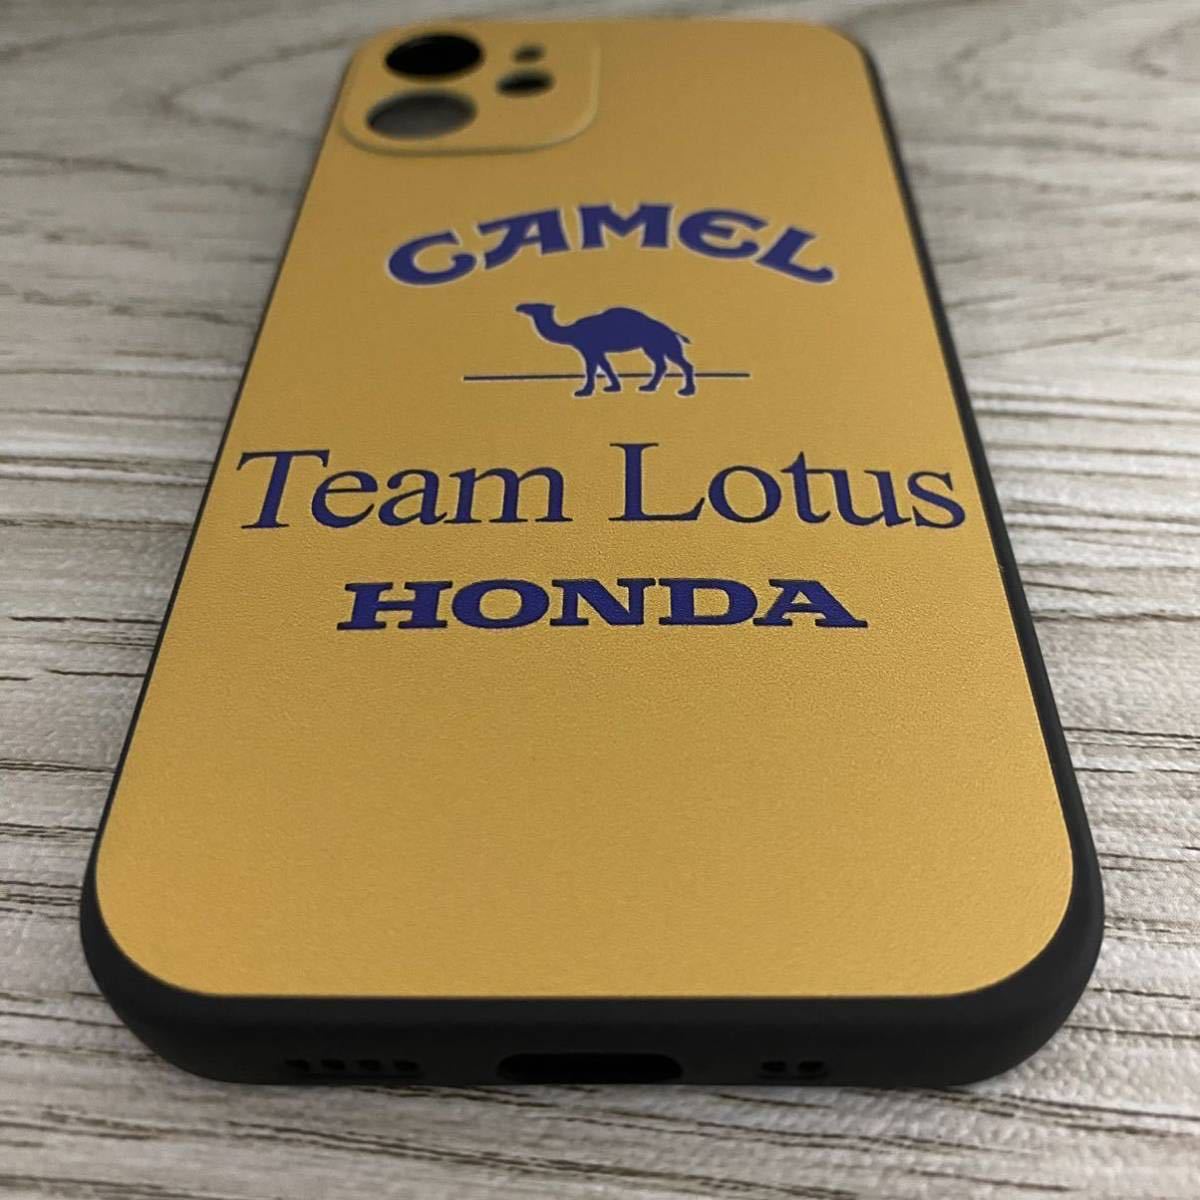  Camel Lotus Honda iPhone 12 mini case F1 i-ll ton * Senna smartphone 